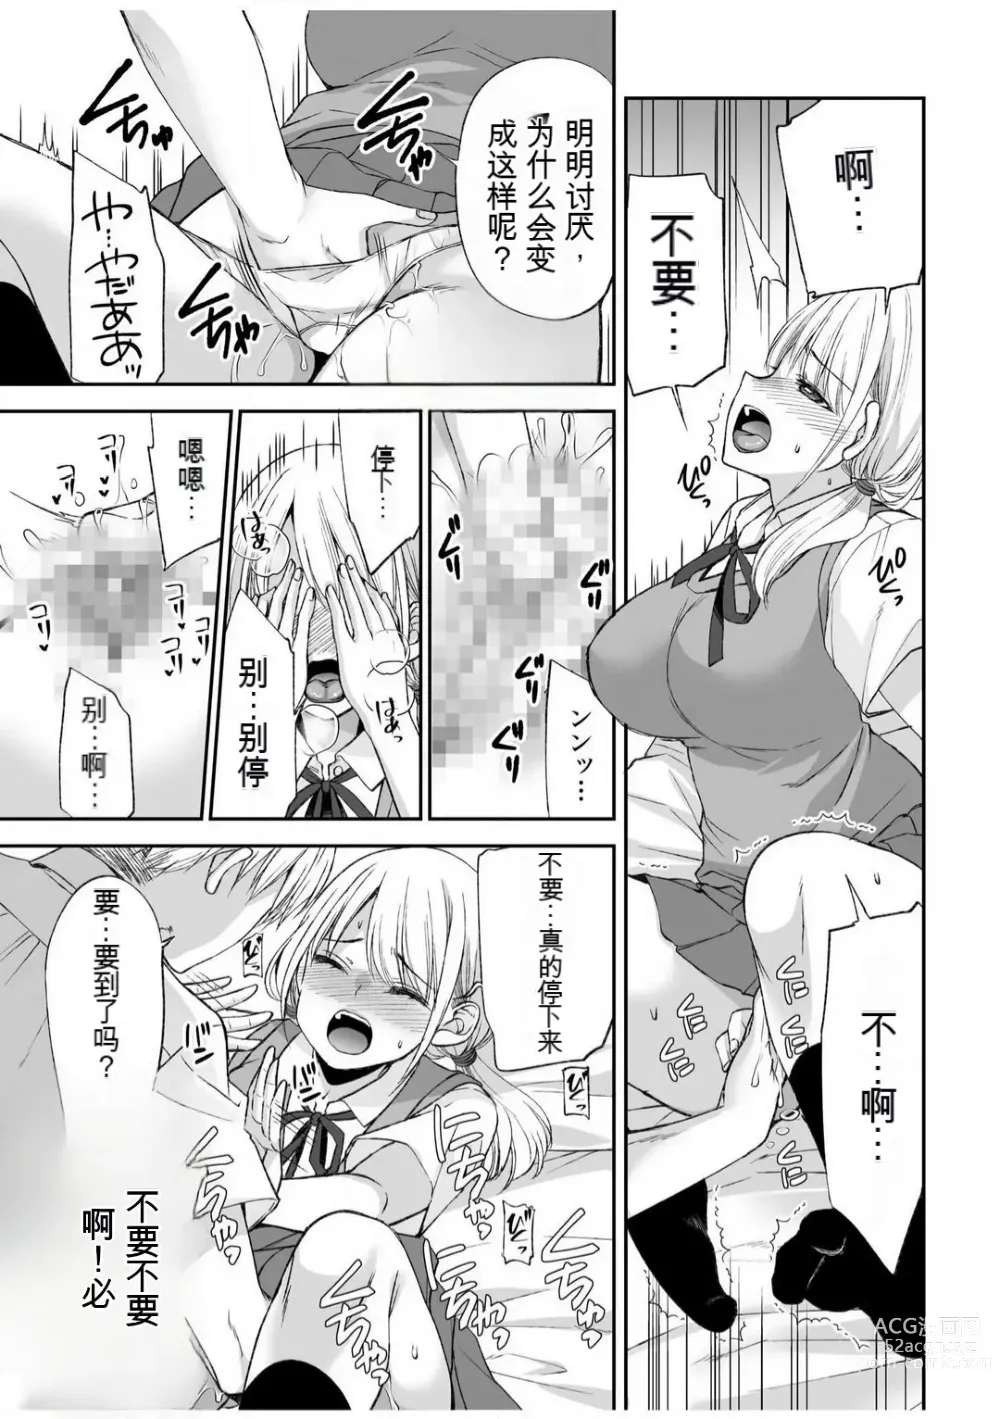 Page 14 of manga 「不要...不要进来太多...」〜冷酷攻略系的青梅竹马和义兄妹〜SEX〜【18禁】 1-10【GPT翻译】